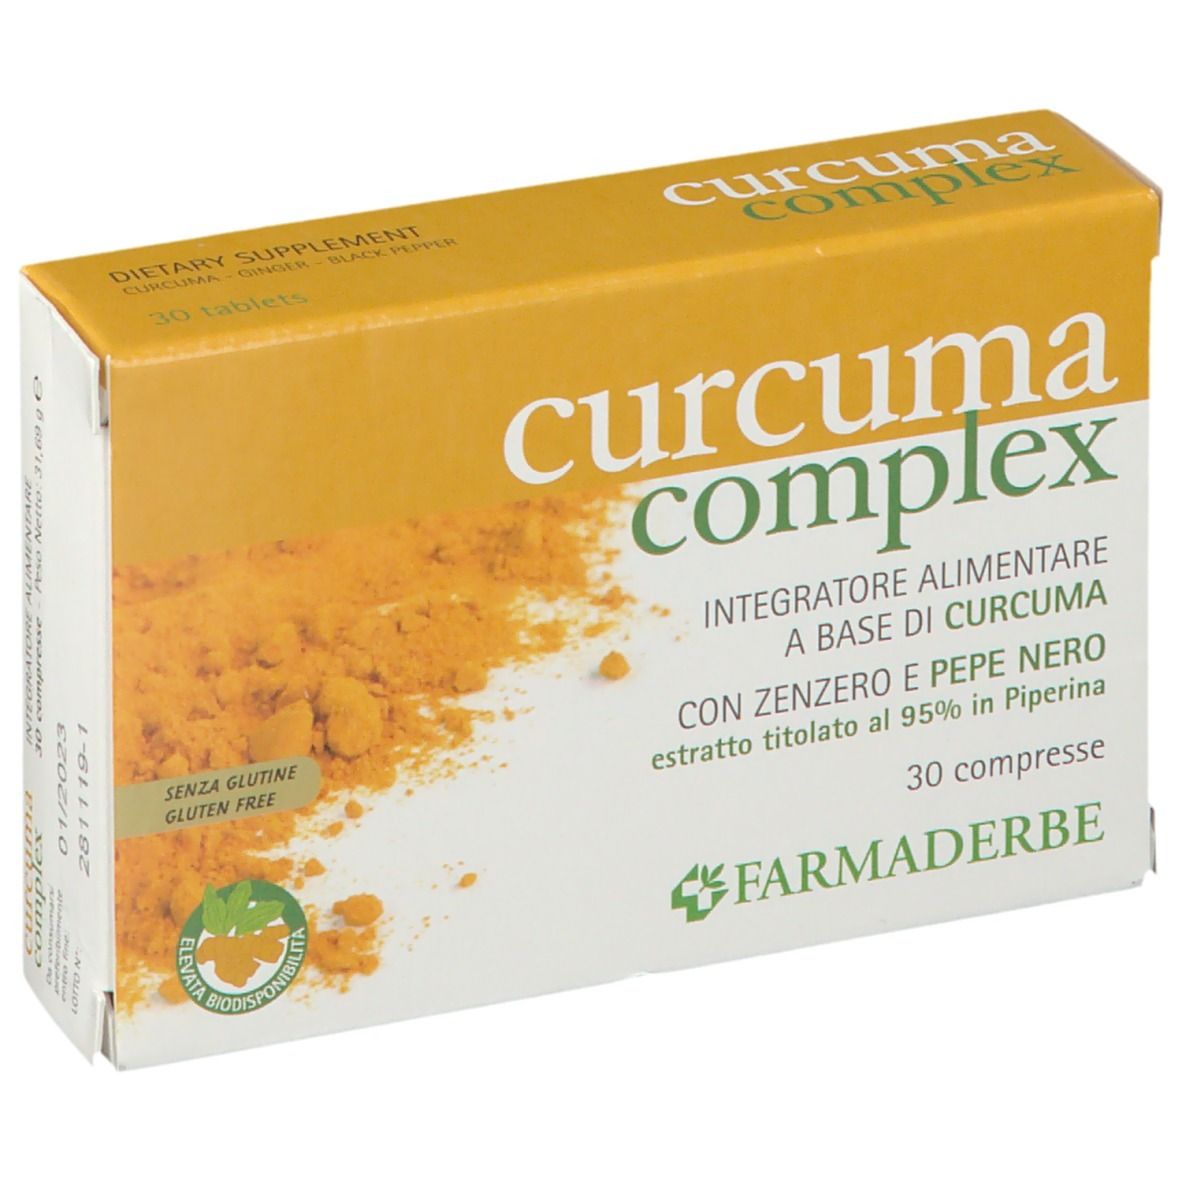 FARMADERBE Curcuma Complex